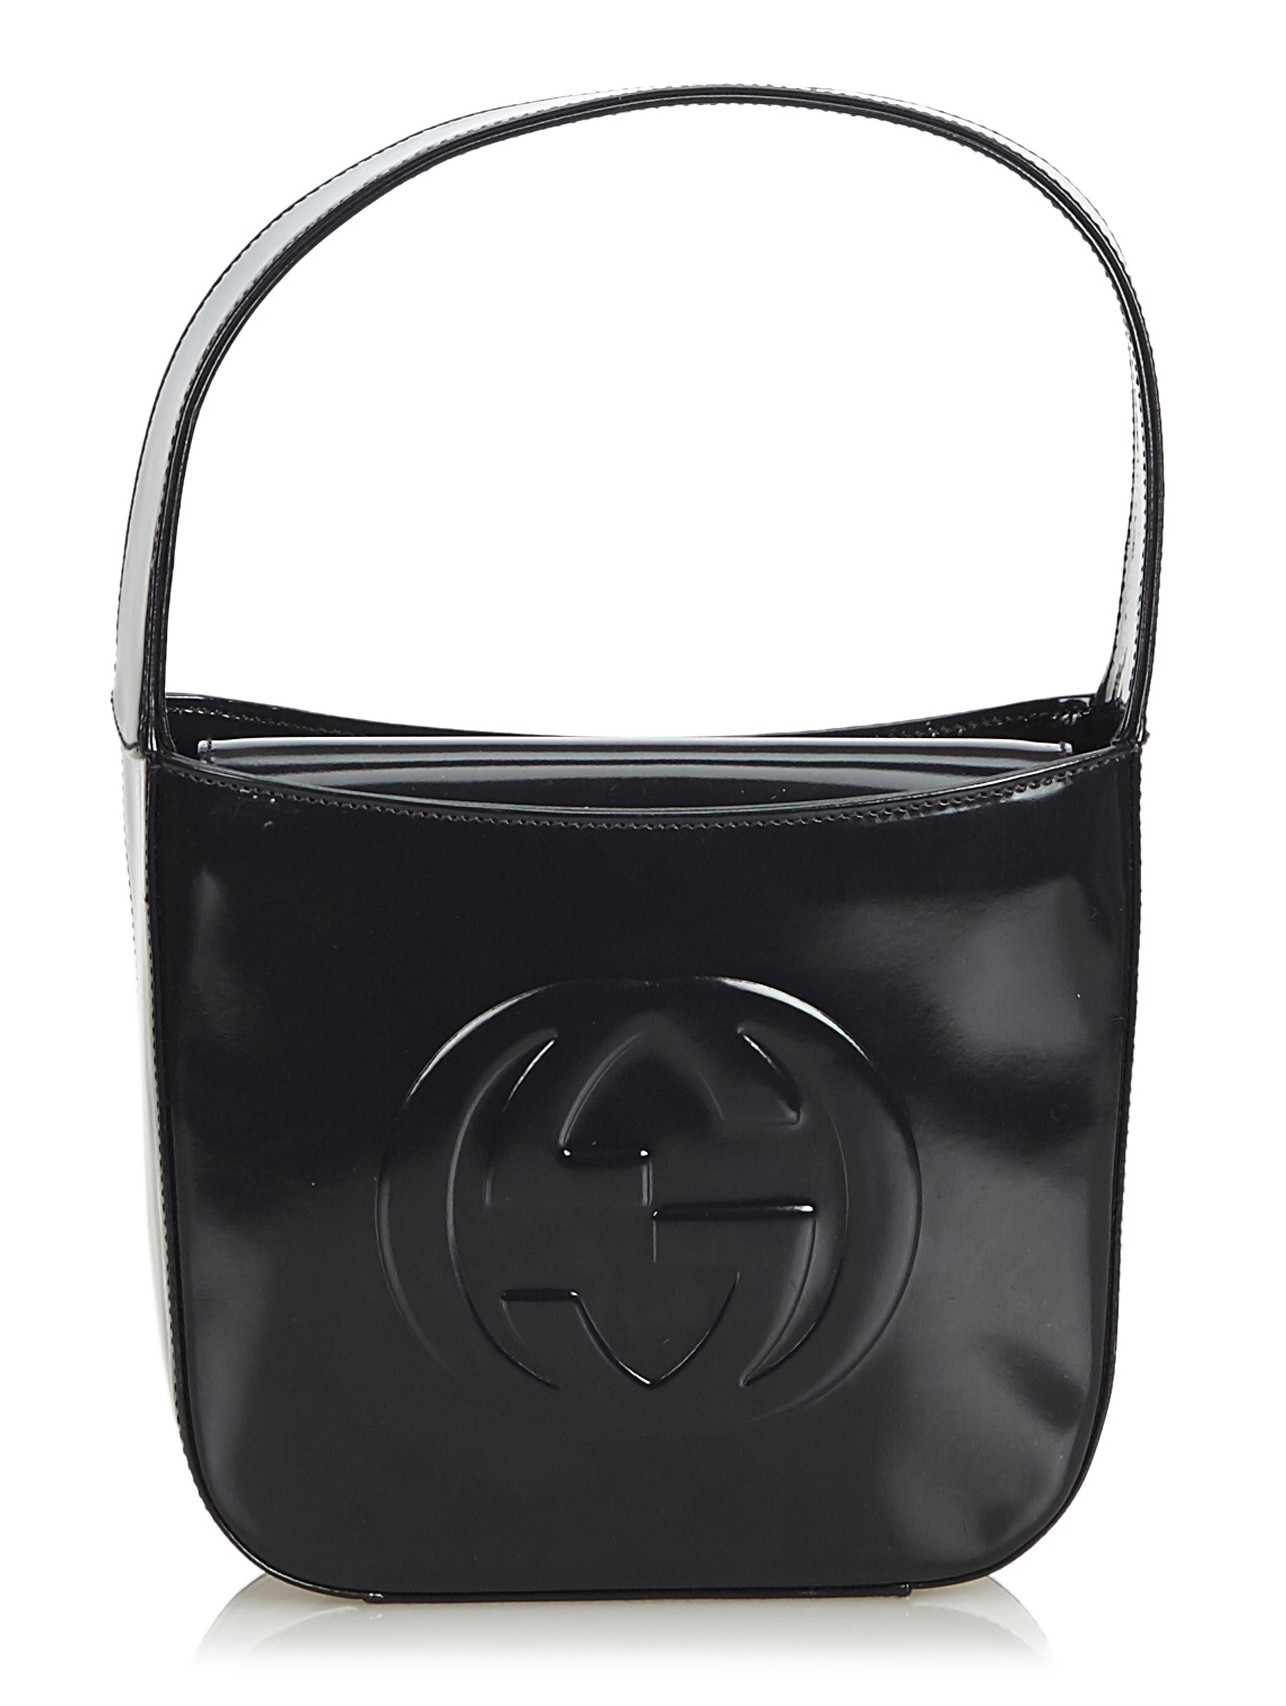 gucci bag black leather